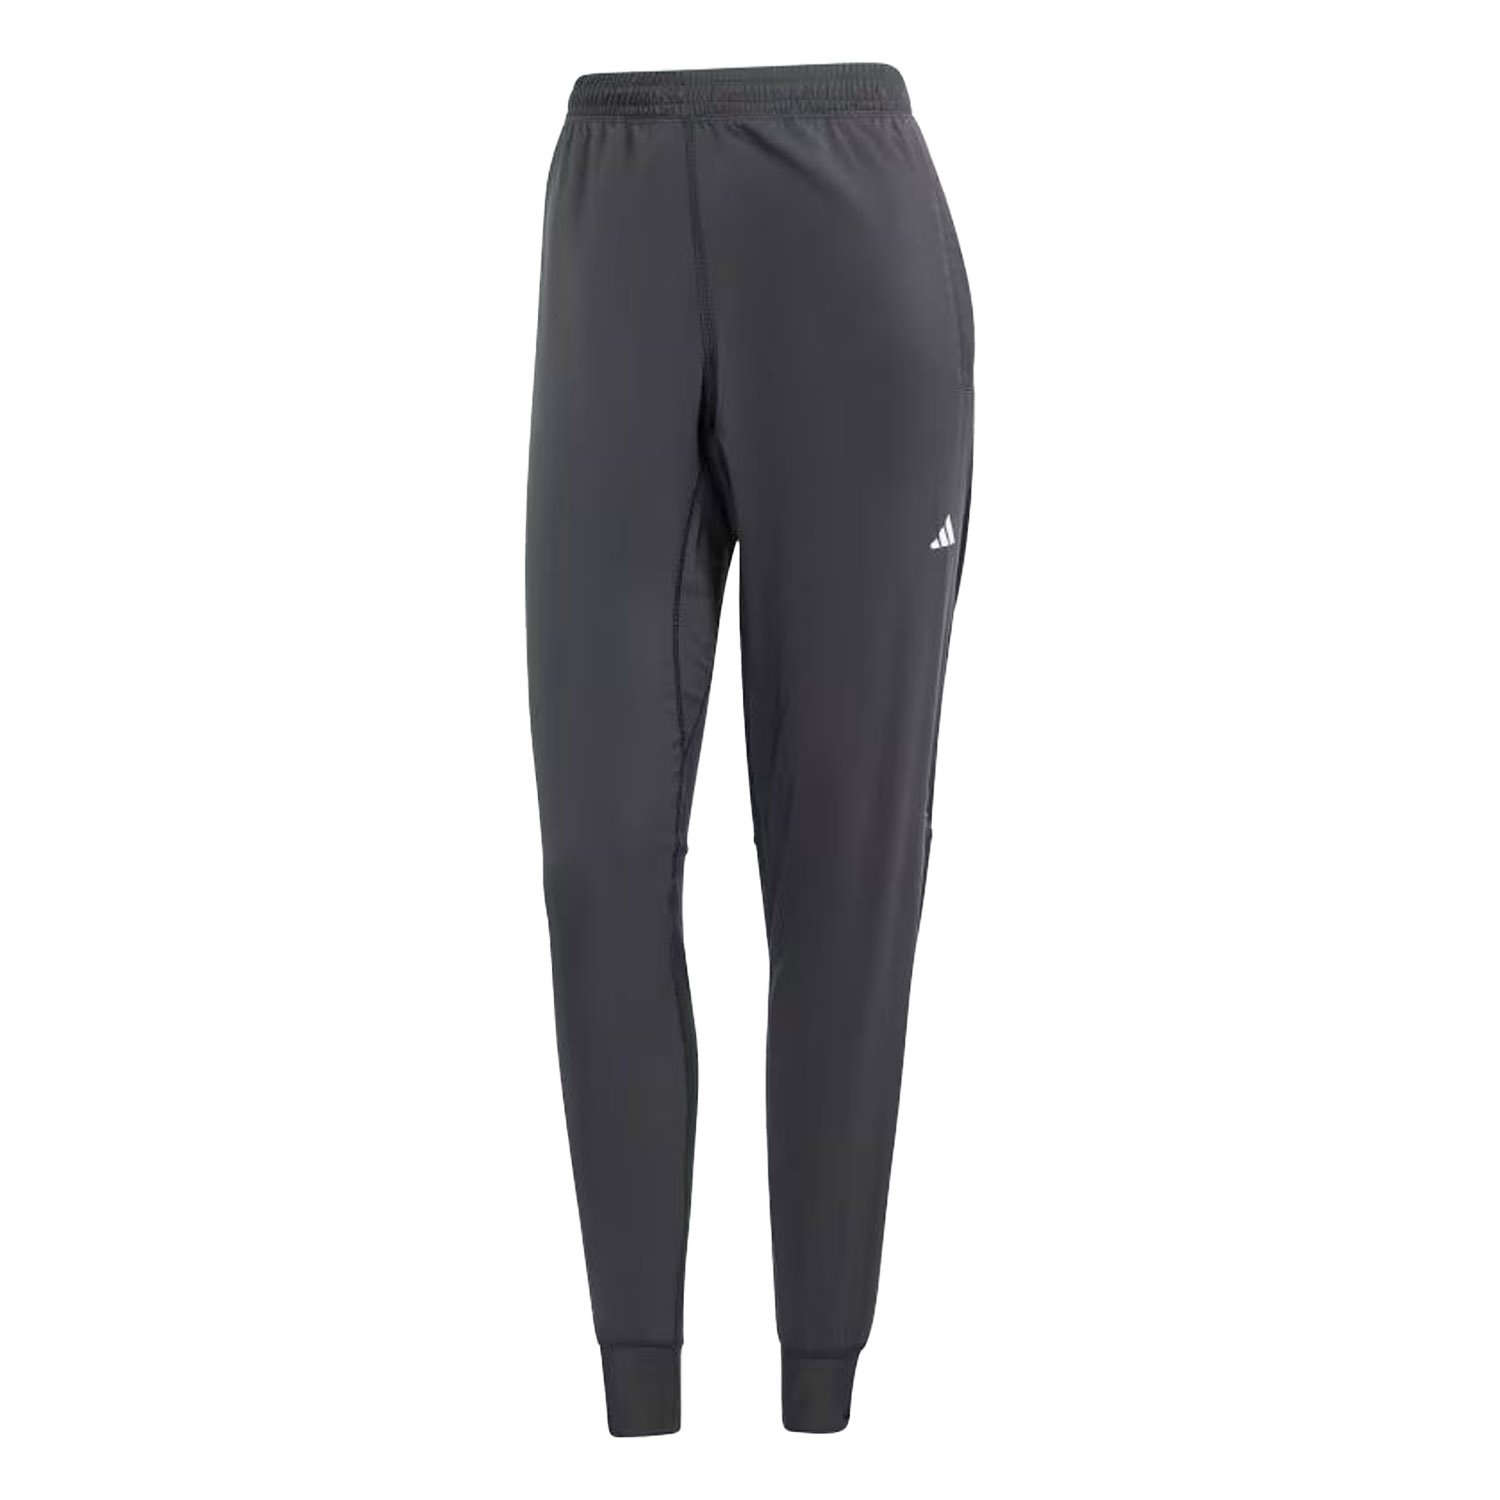 Adidas Otr B Kadın Koşu Pantolonu - Siyah - 1